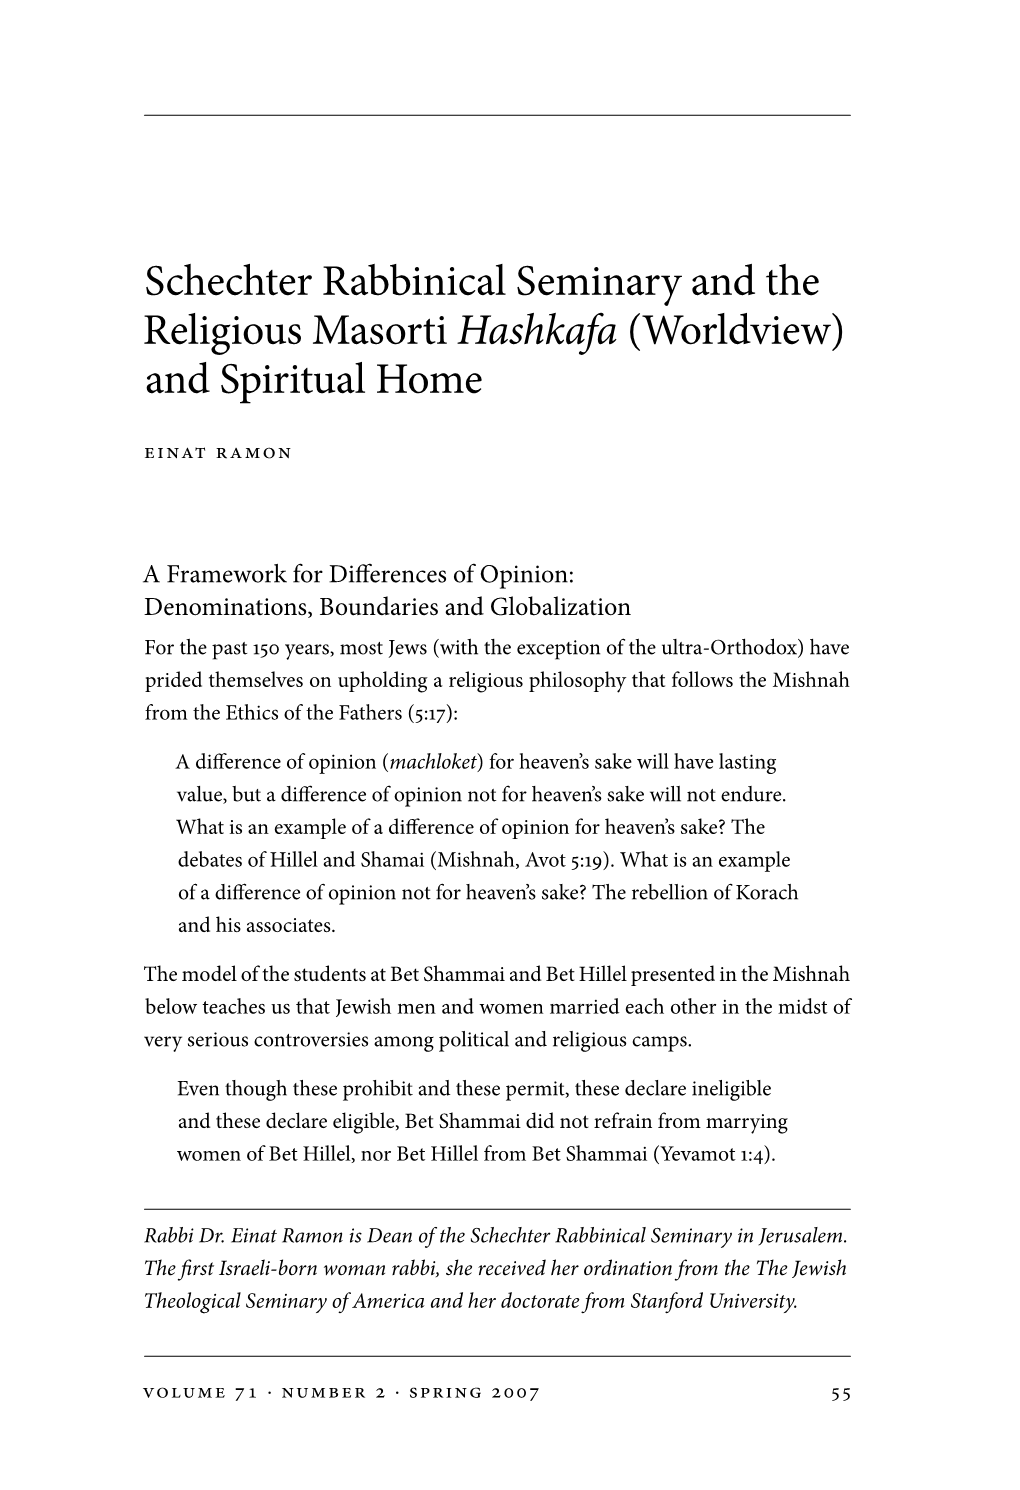 Schechter Rabbinical Seminary and the Religious Masorti Hashkafa (Worldview) and Spiritual Home